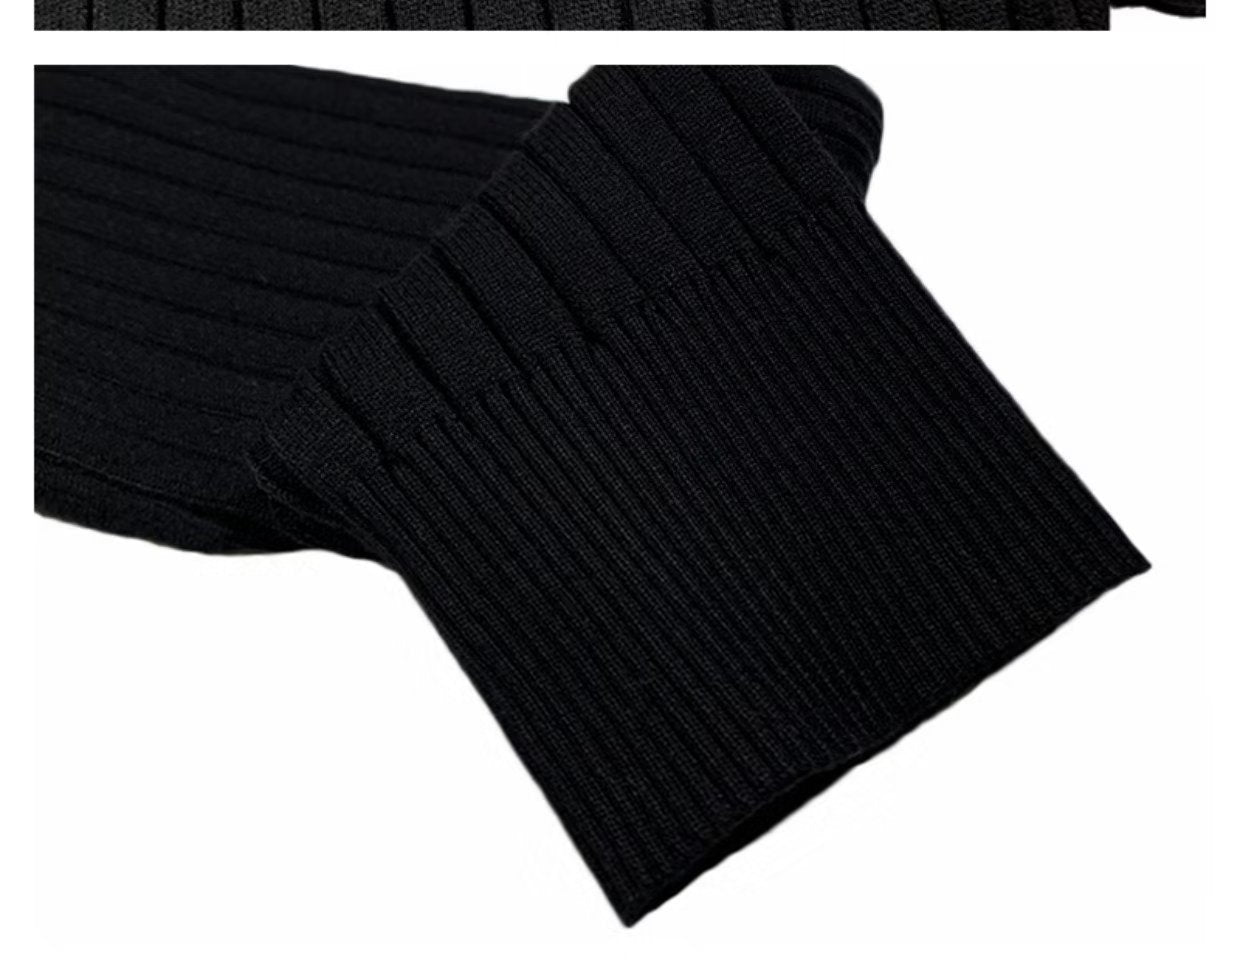 Polo Shirt Lapel Sweater